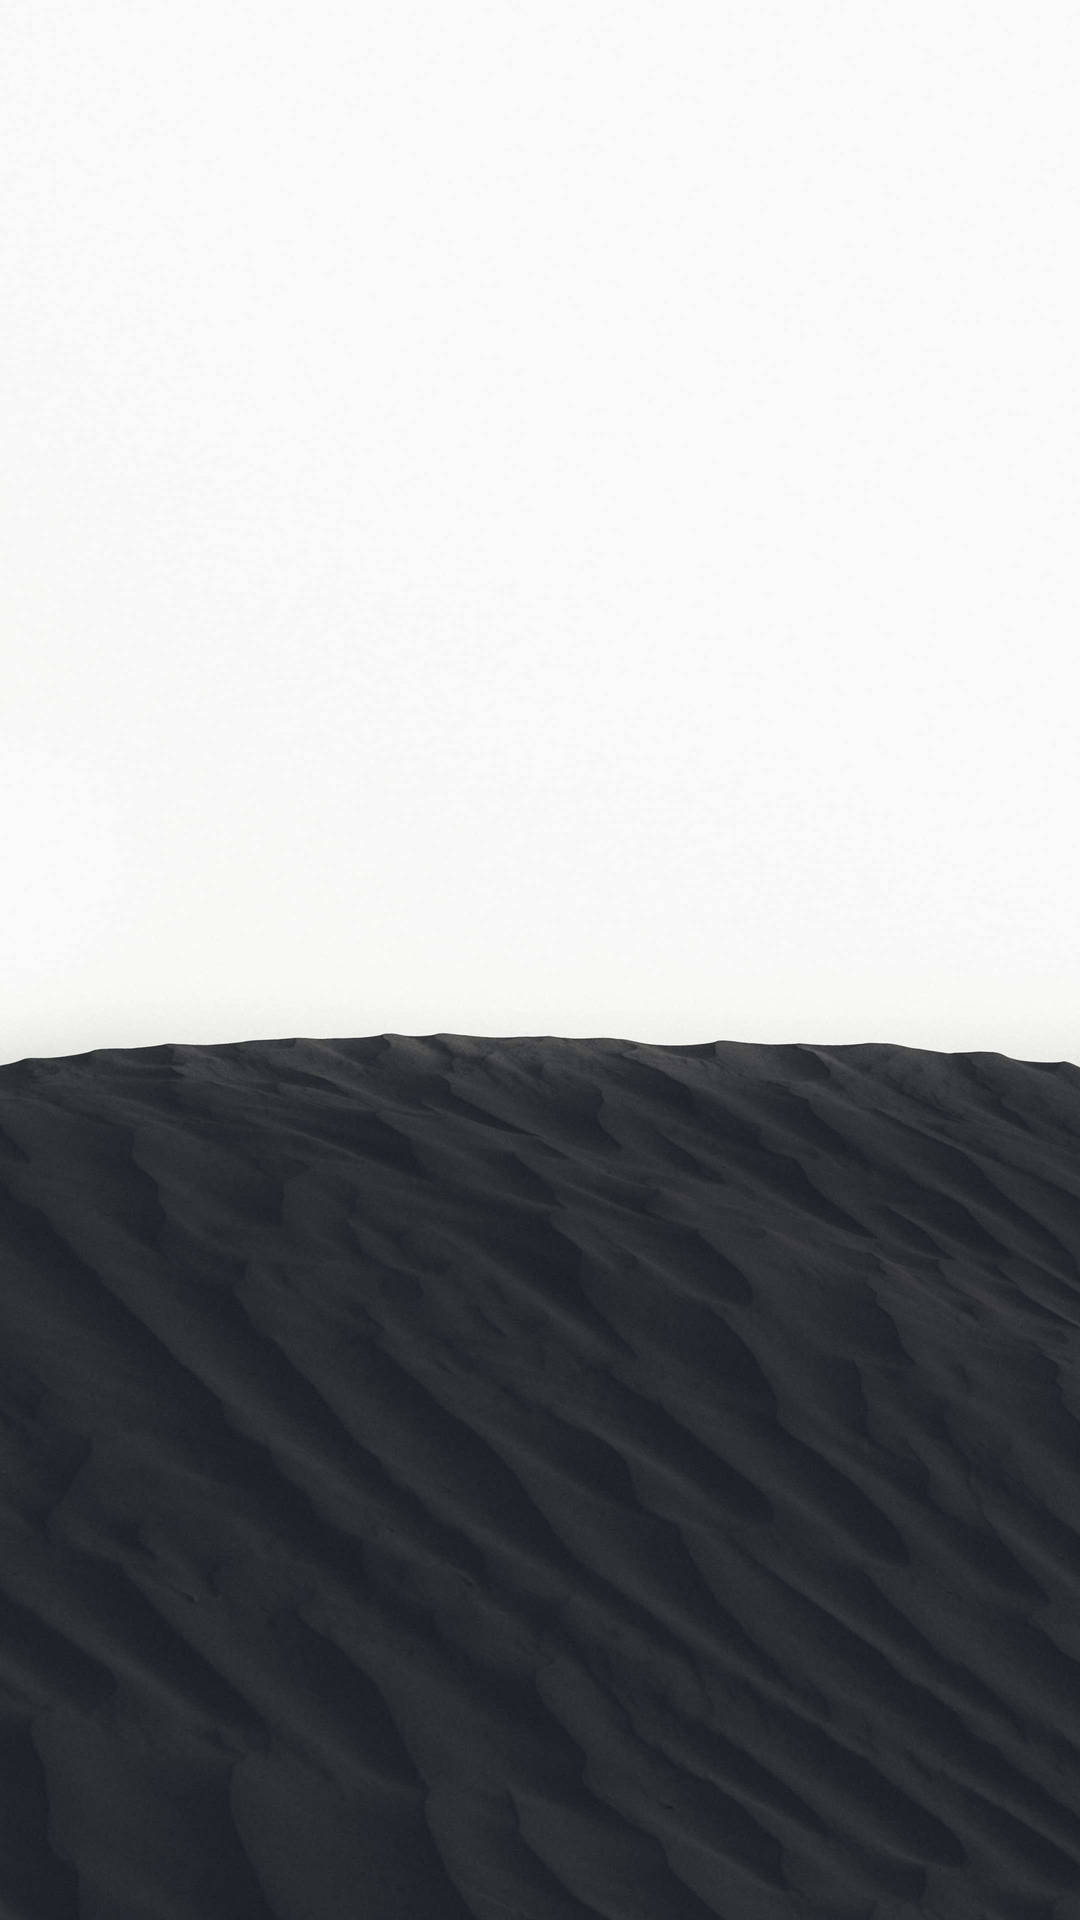 Desert Minimalist Phone Background